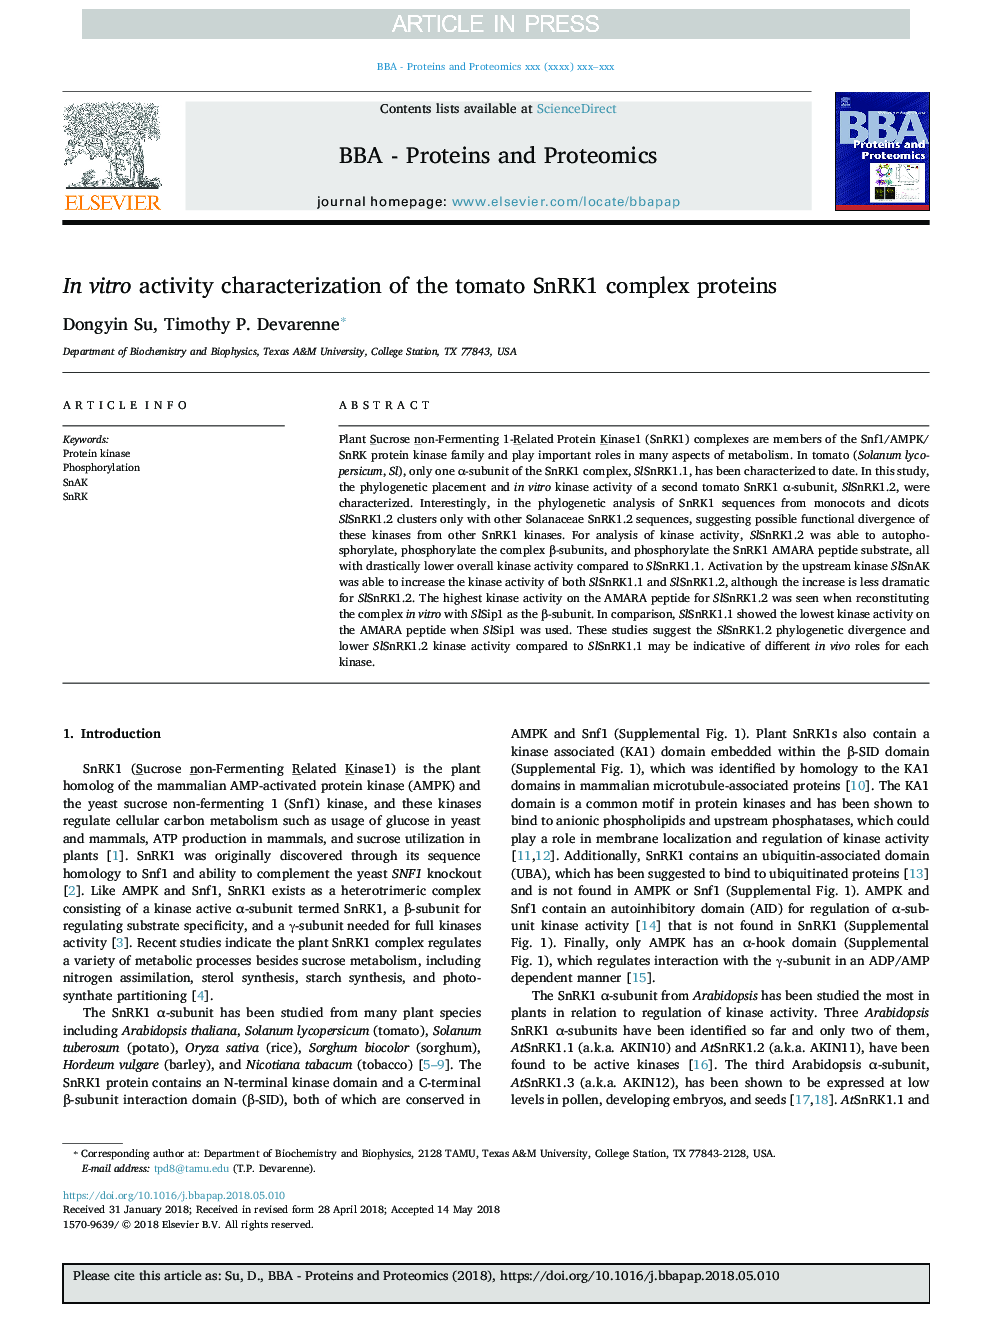 In vitro activity characterization of the tomato SnRK1 complex proteins